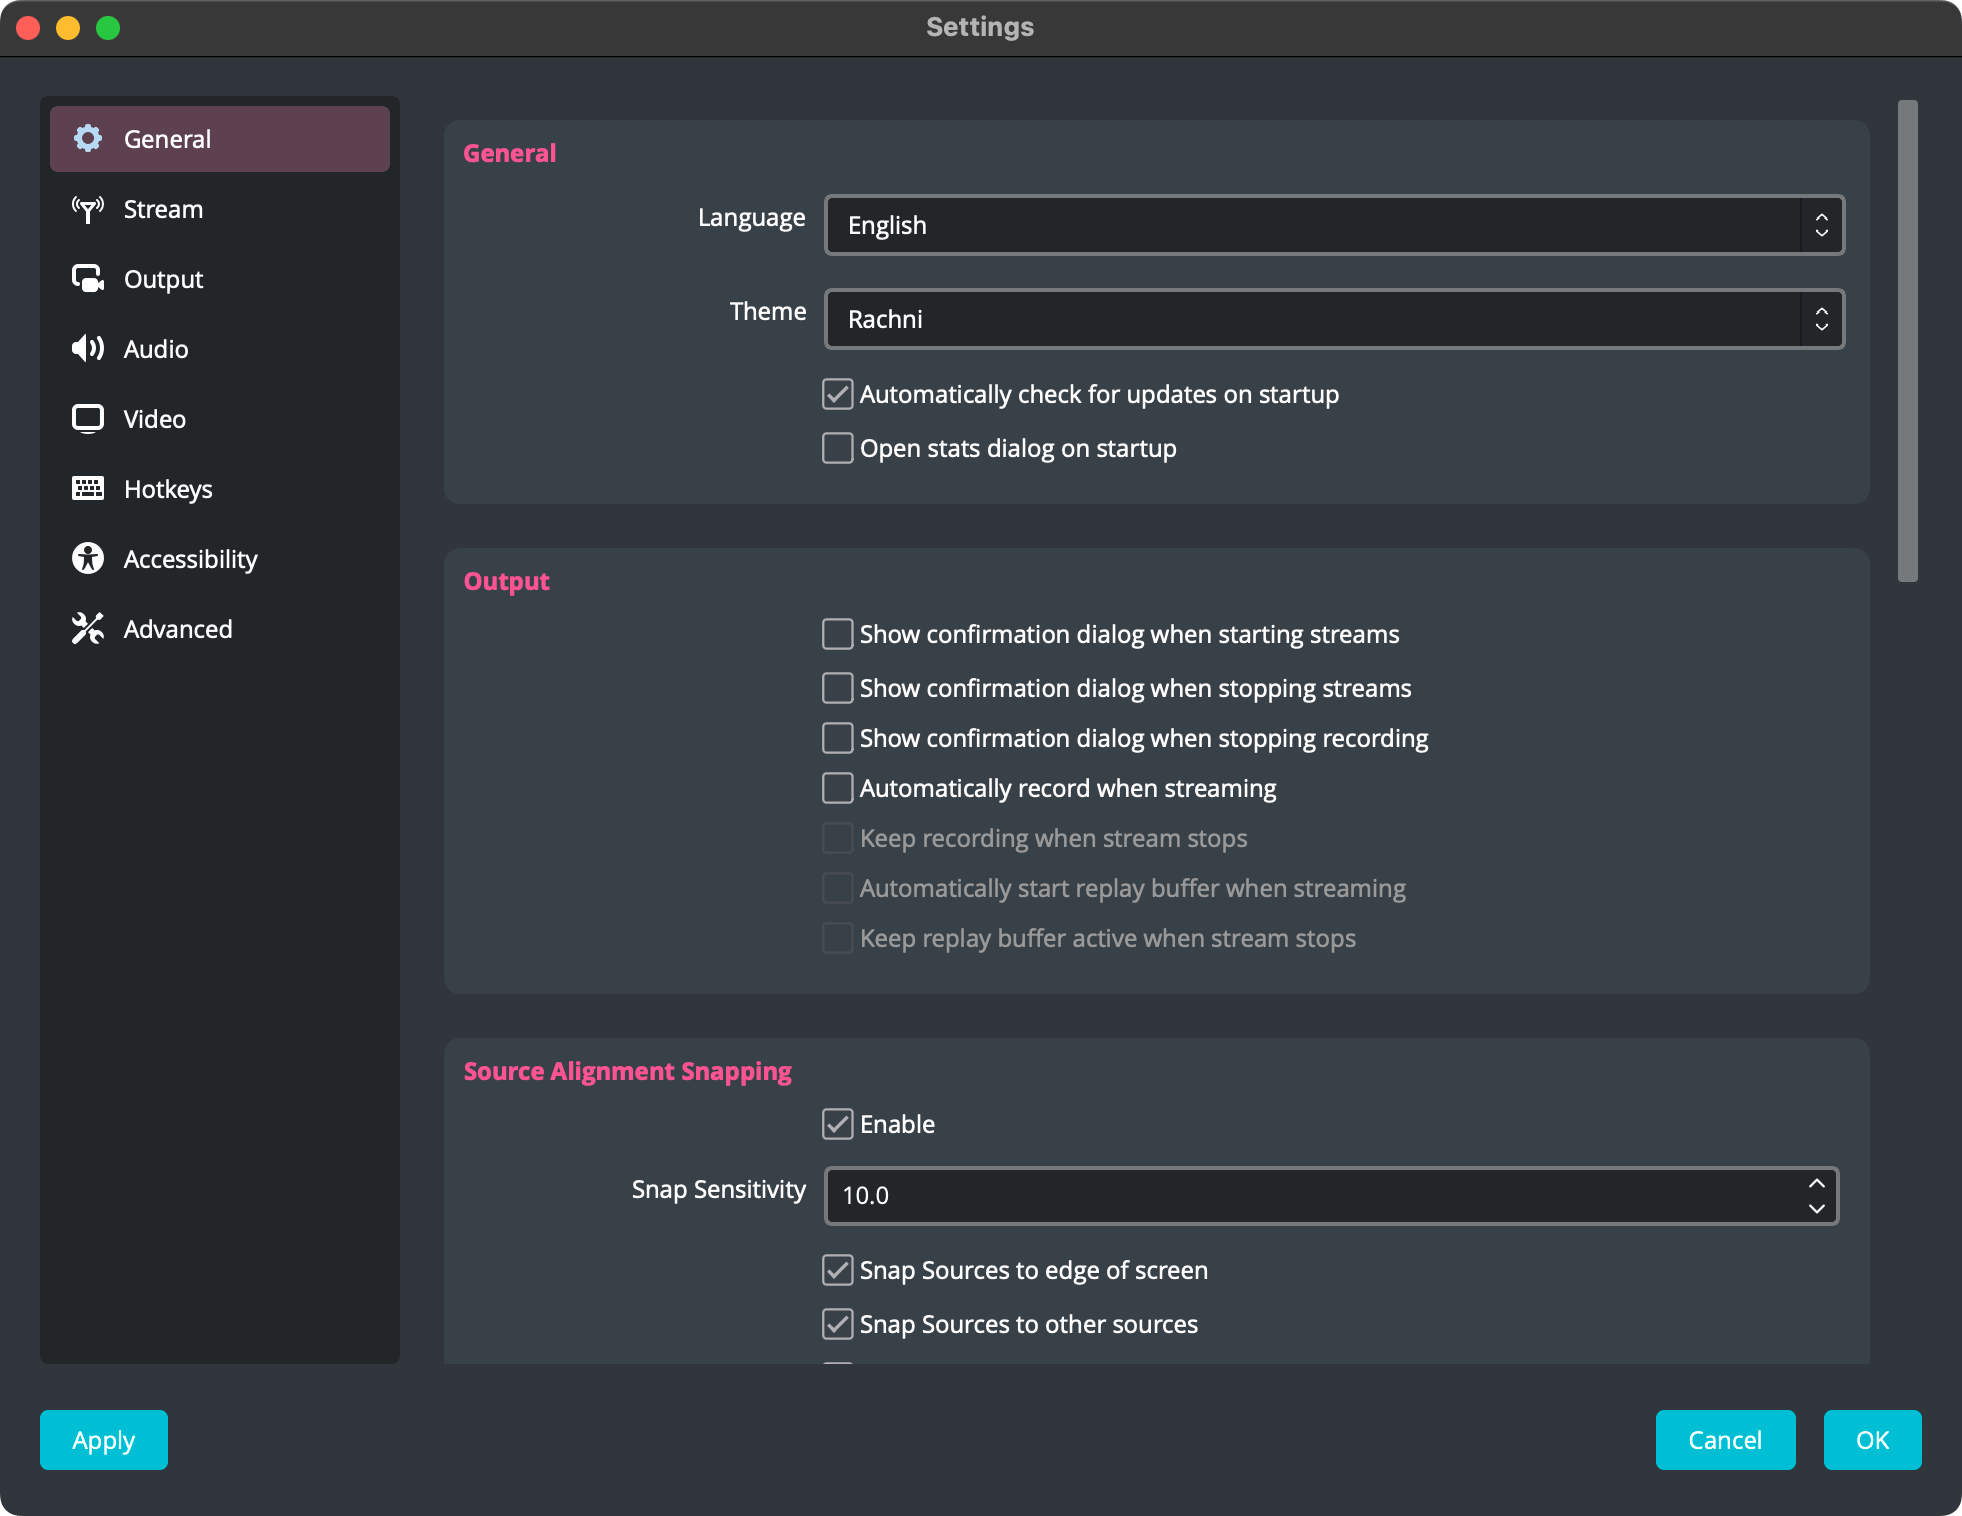 OBS Studio's settings window showing the Rachni theme